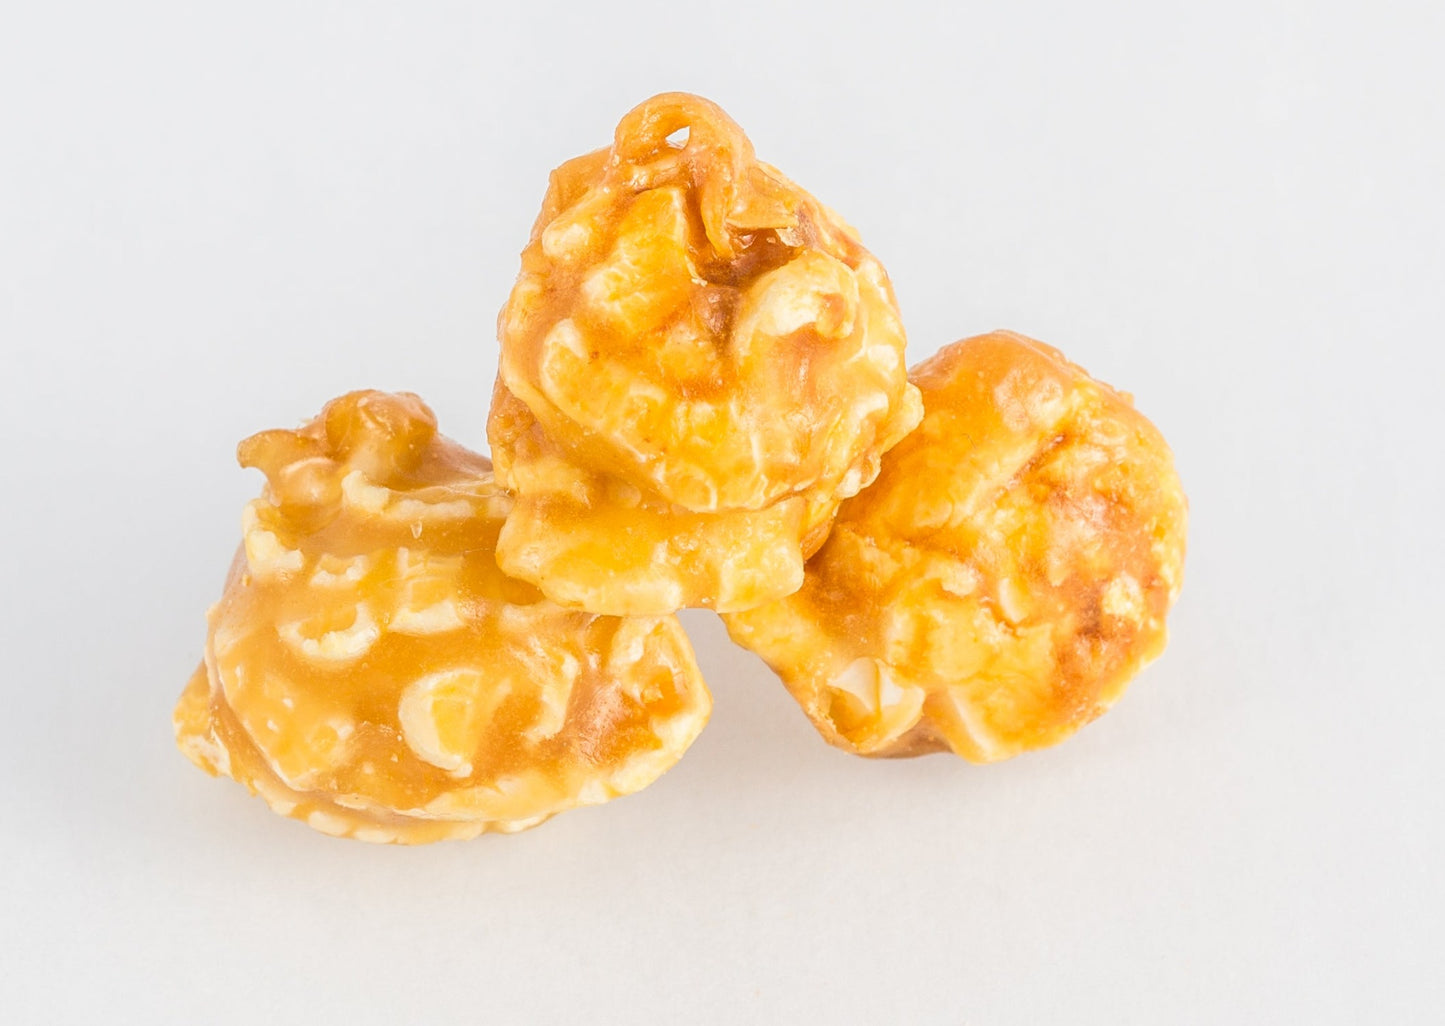 Stacked kernels of caramel-coated popcorn